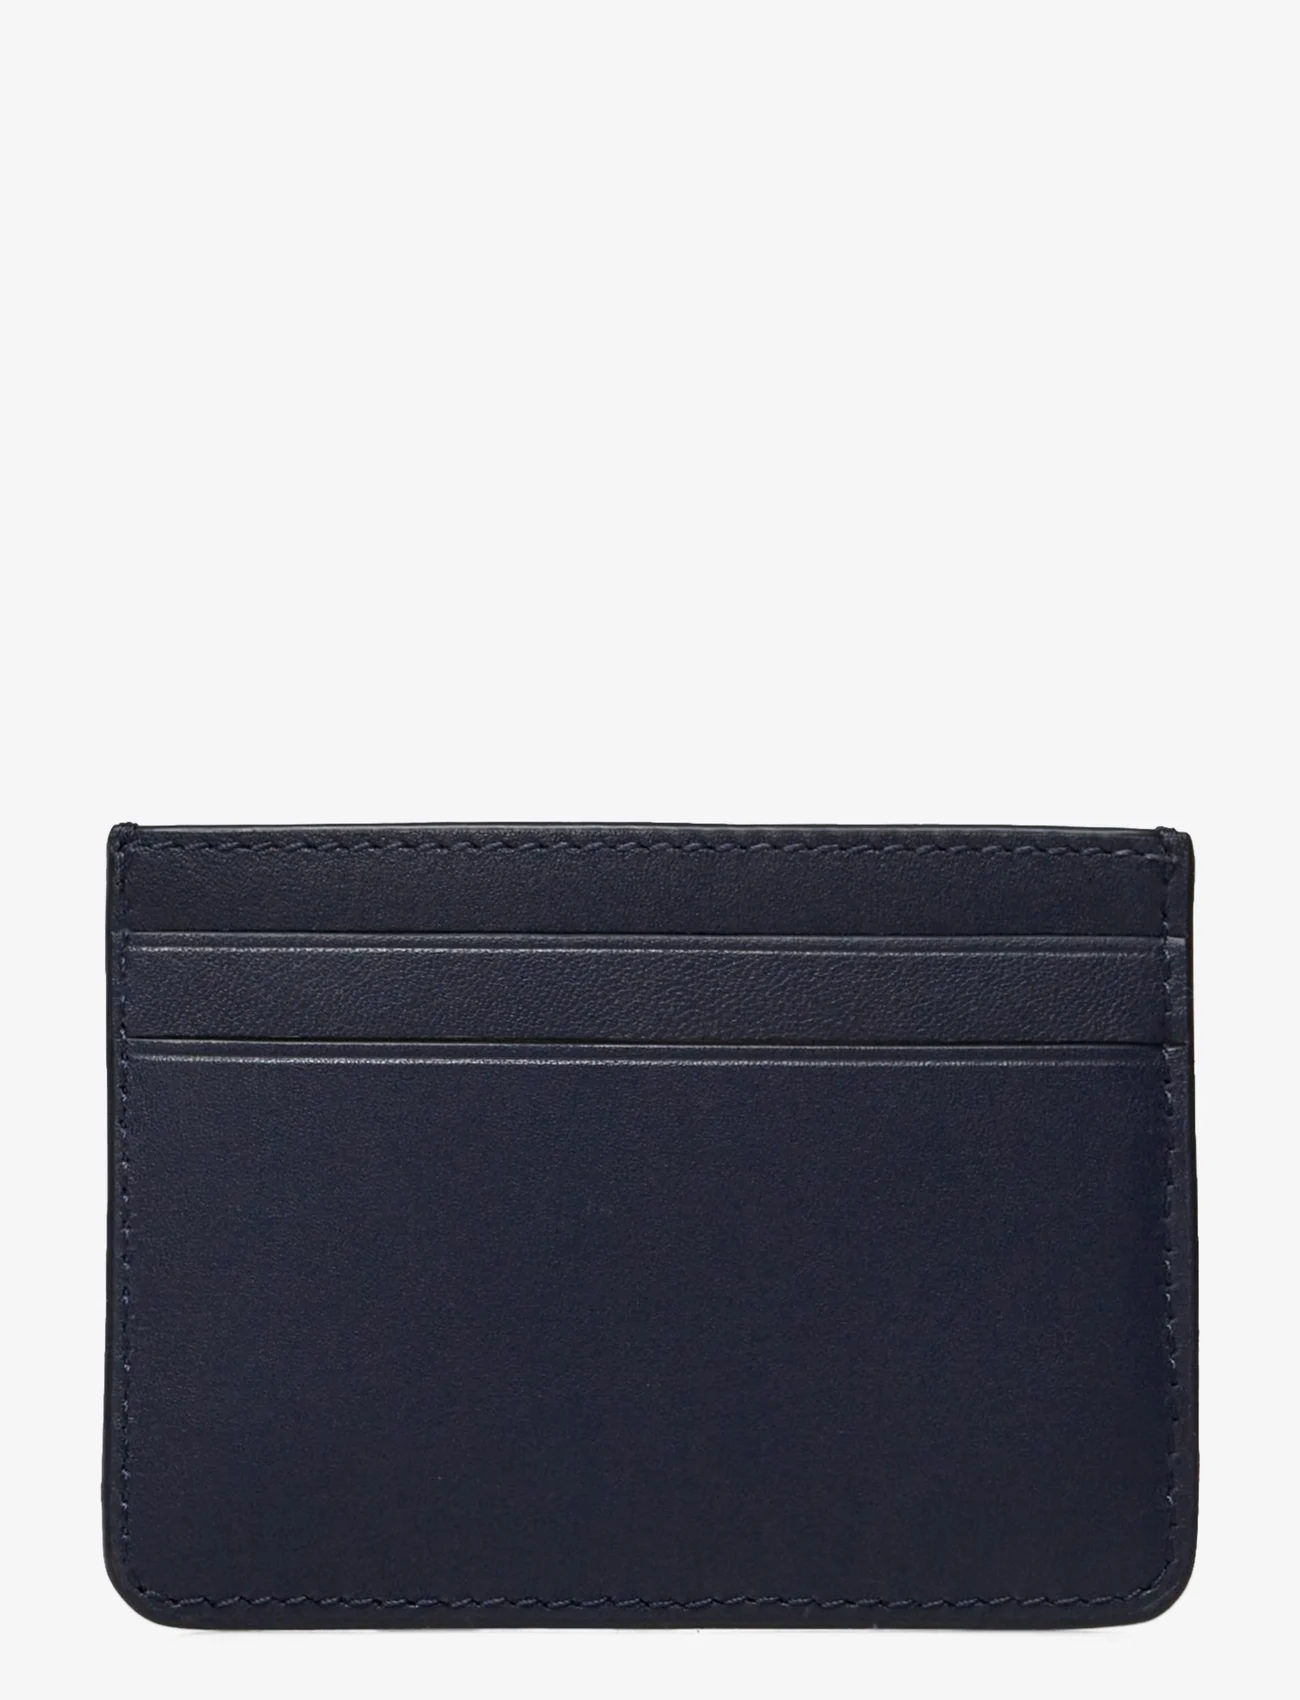 Lauren Ralph Lauren - Leather Card Case - karšu turētāji - refined navy - 1